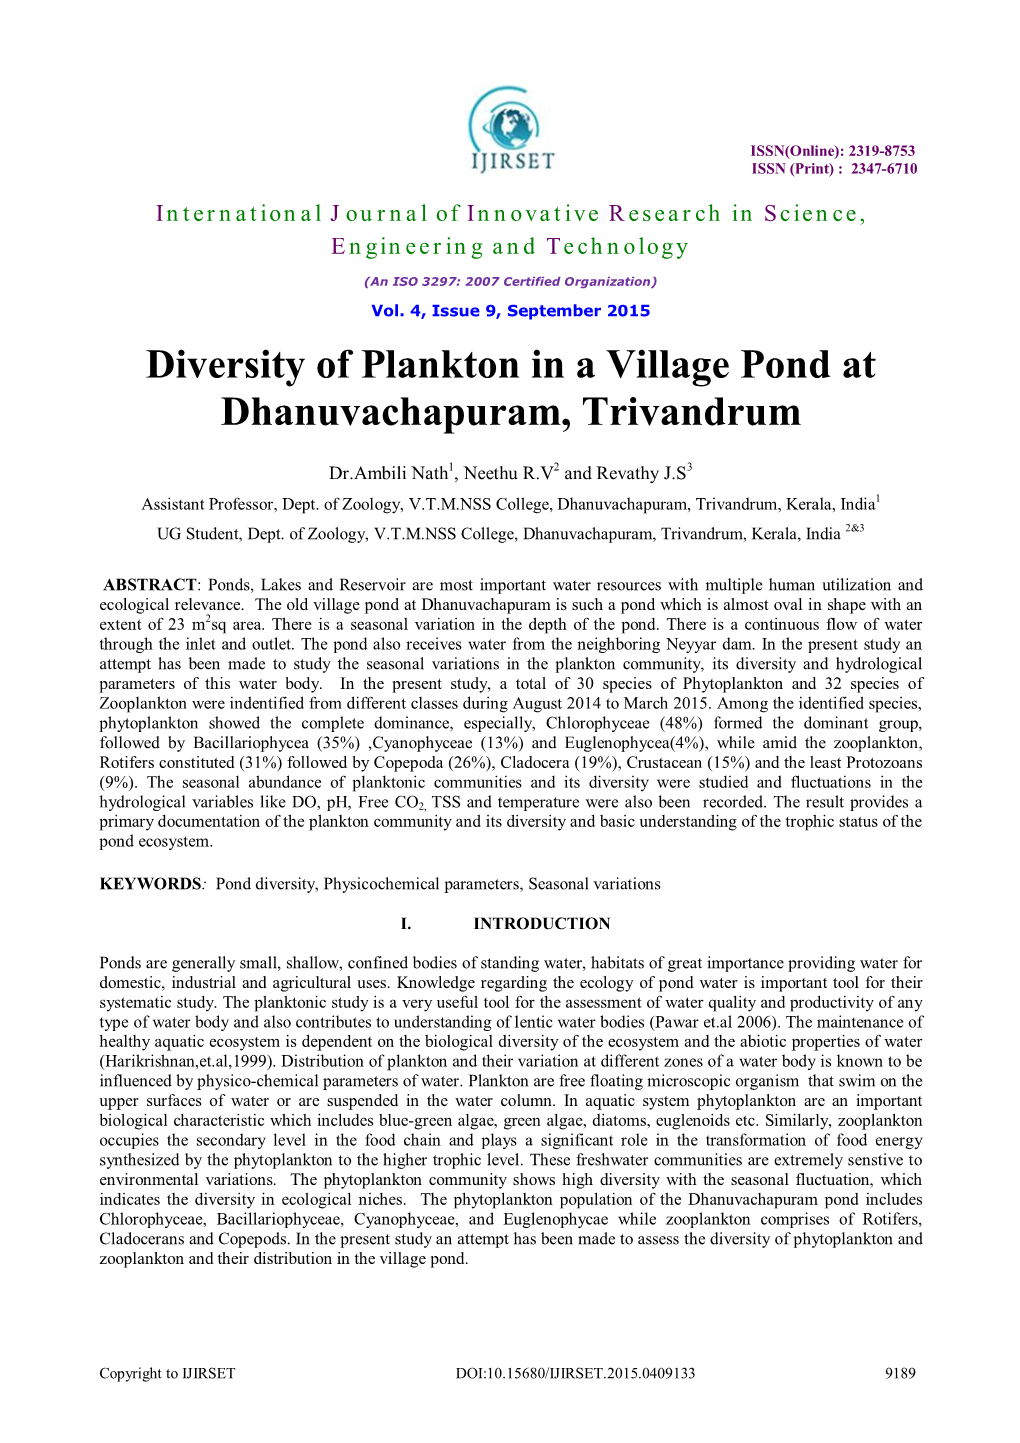 Diversity of Plankton in a Village Pond at Dhanuvachapuram, Trivandrum